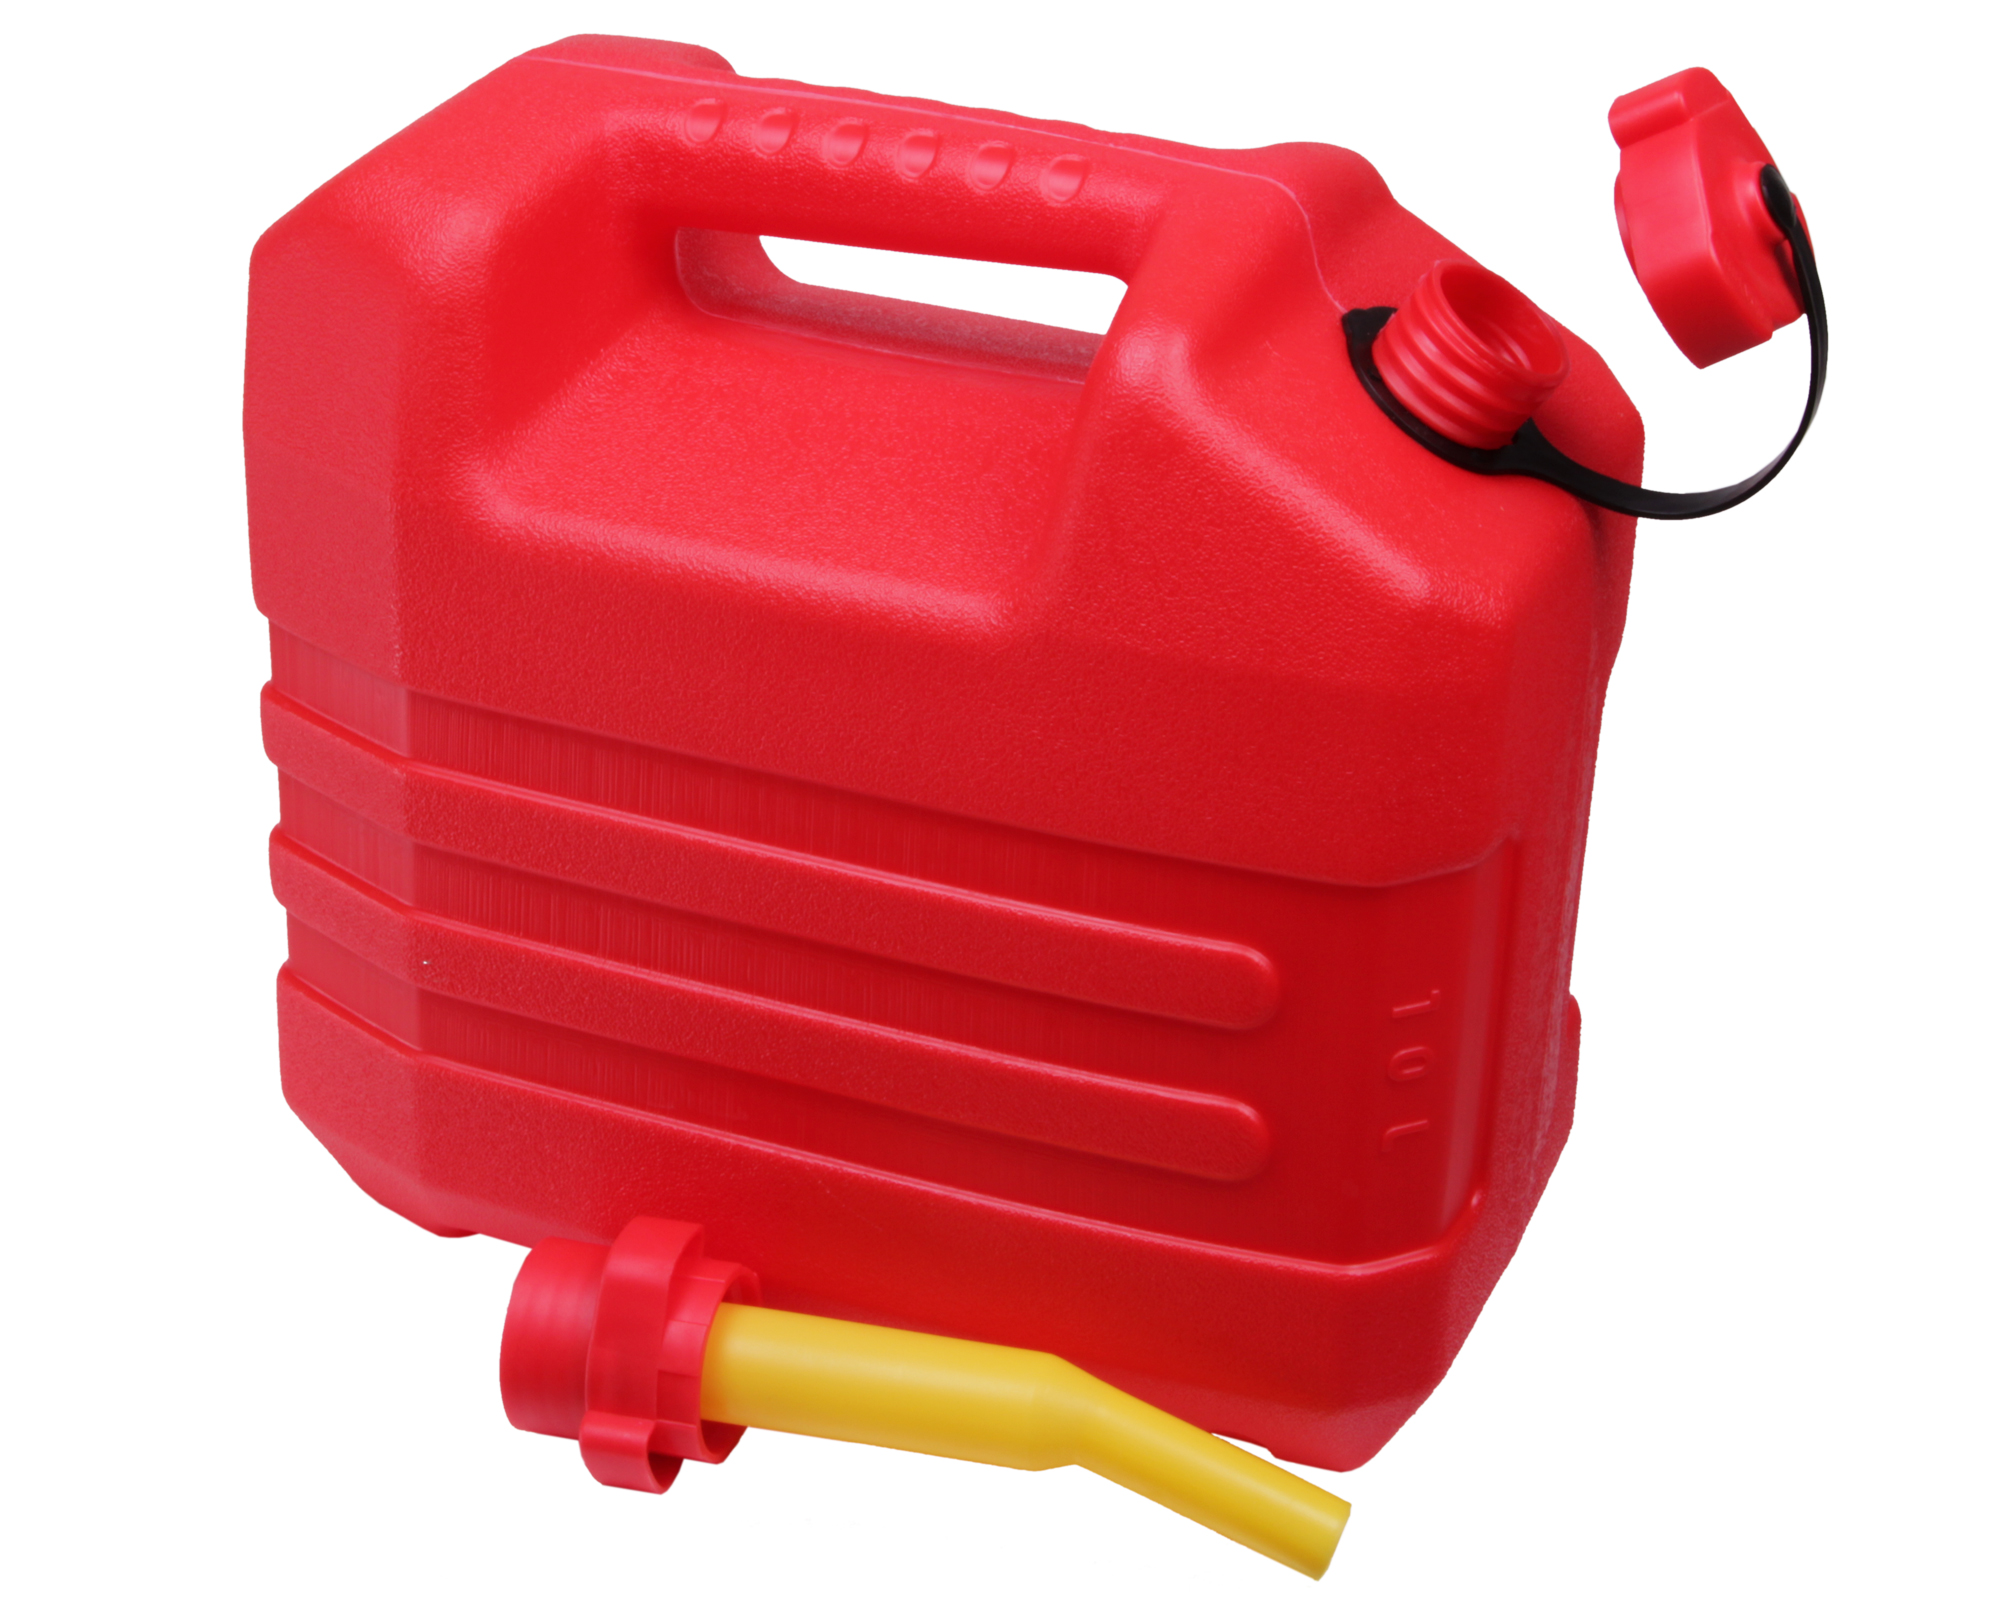 Benzin-Kanister aus robustem Kunststoff kaufen